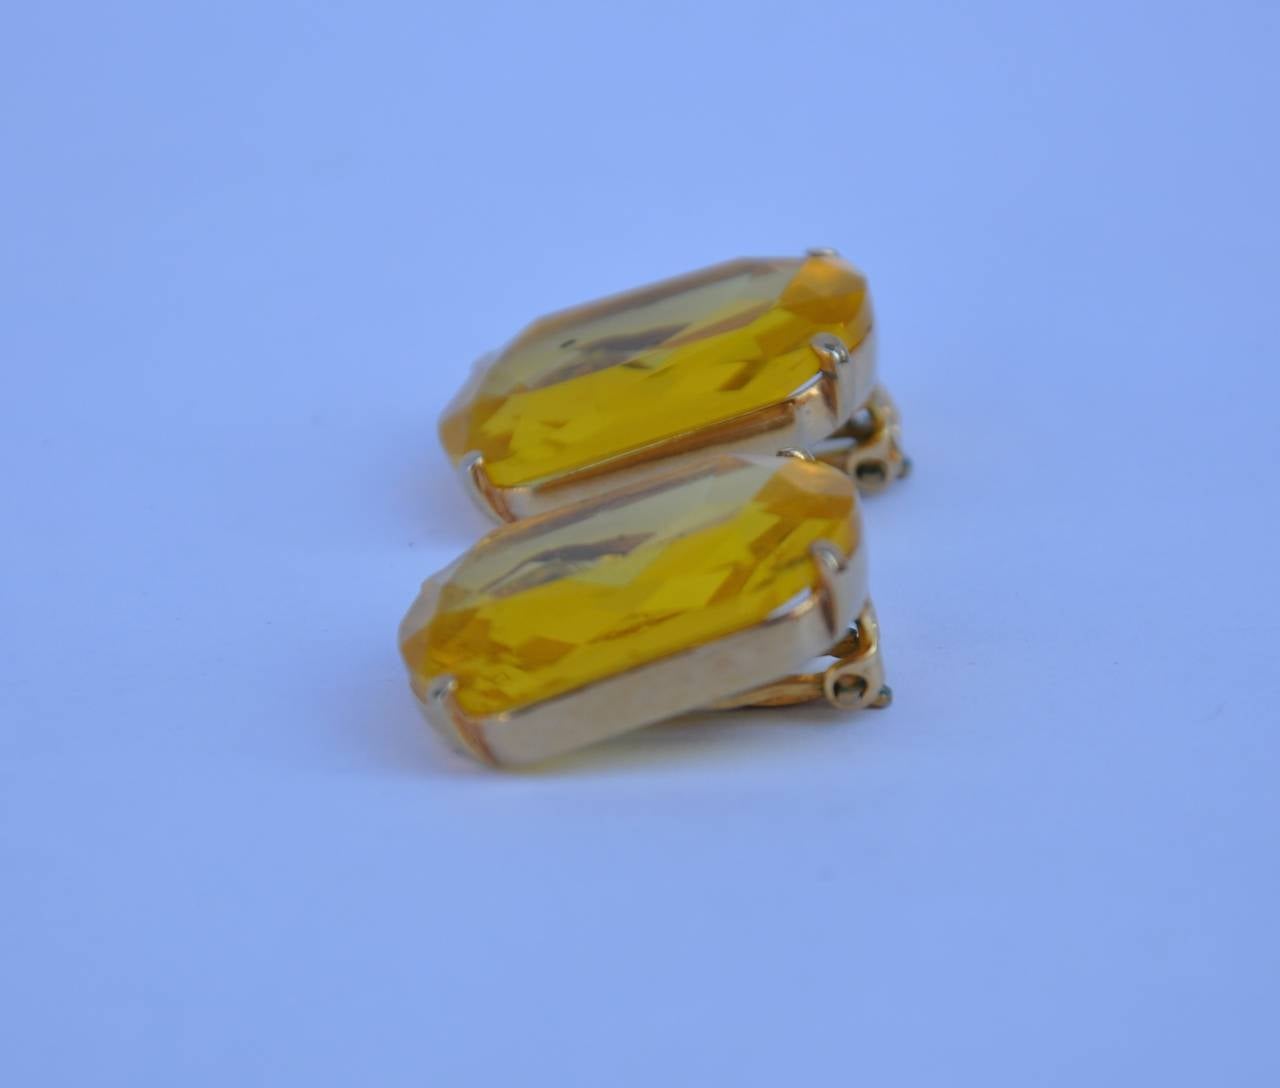 Le magnifique grand clip d'oreille de Schiaparelli en or doré accentué de bleu canari mesure 7/8